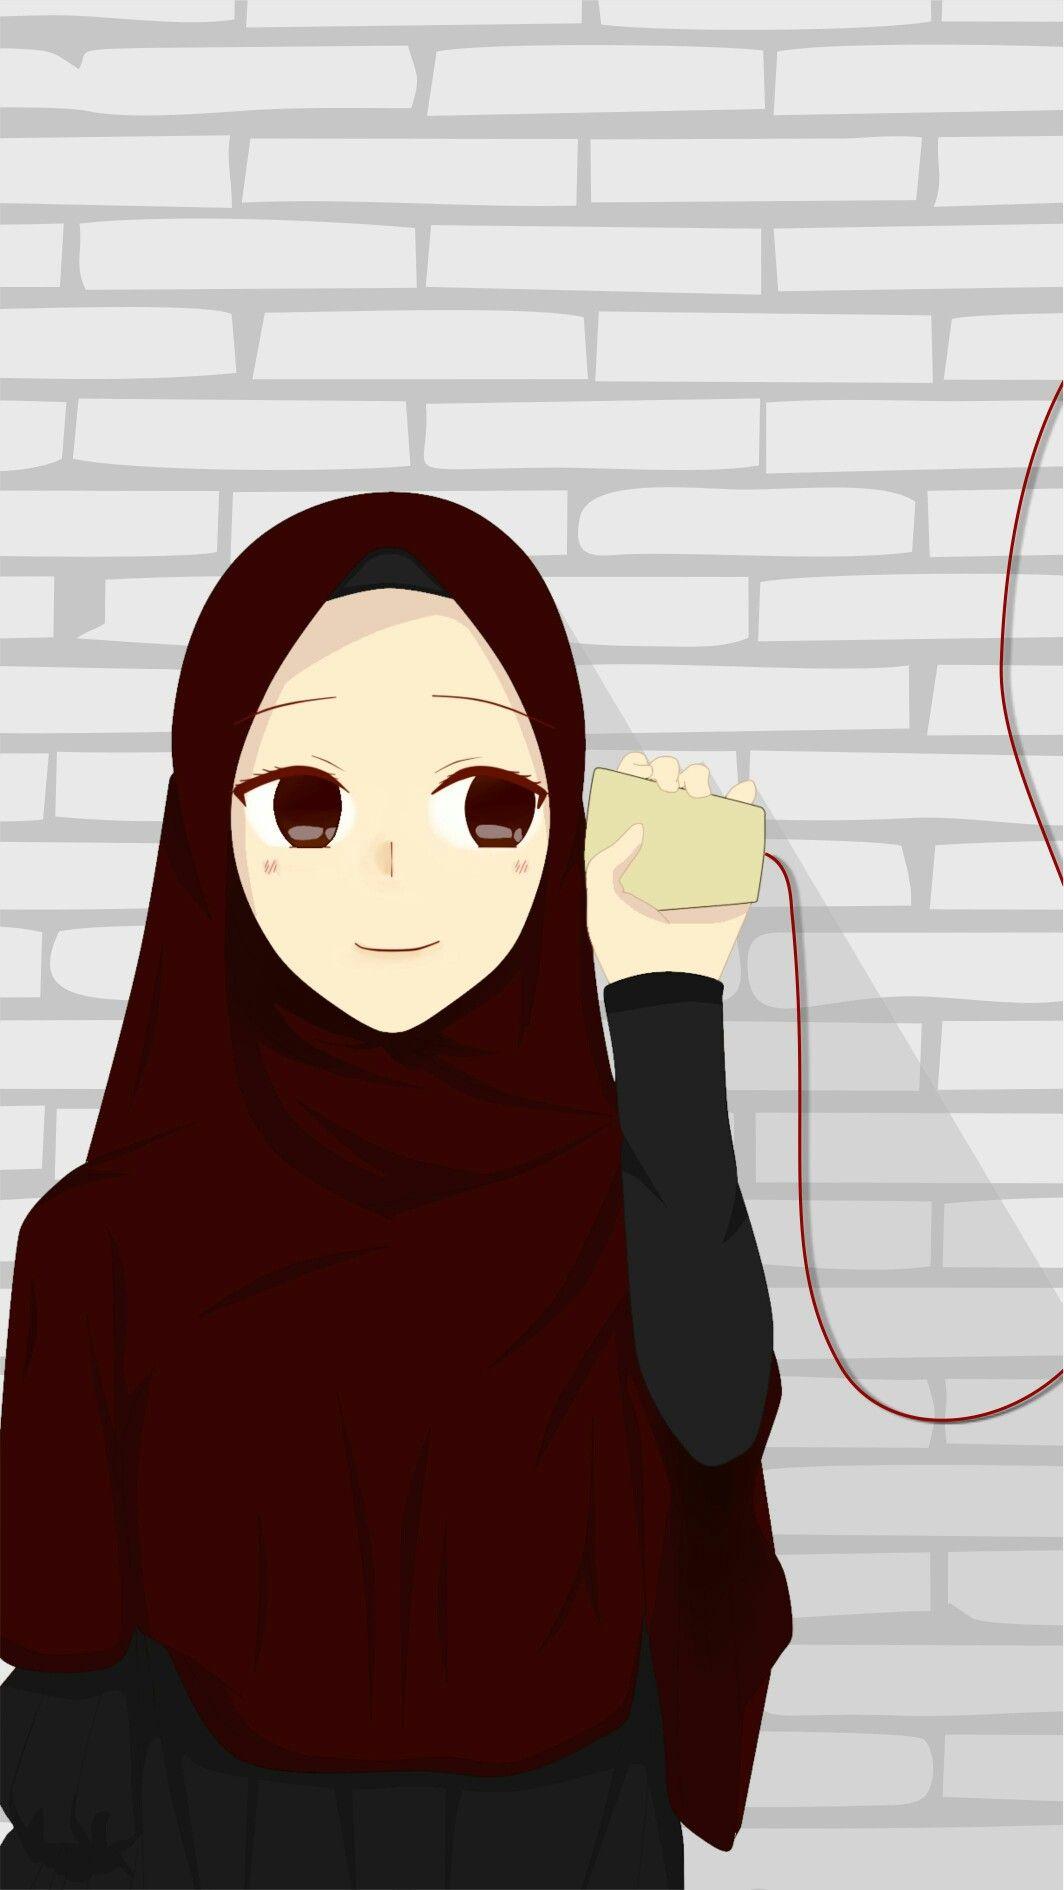 46+ Gambar Kartun Muslimah Pinterest Terbaru